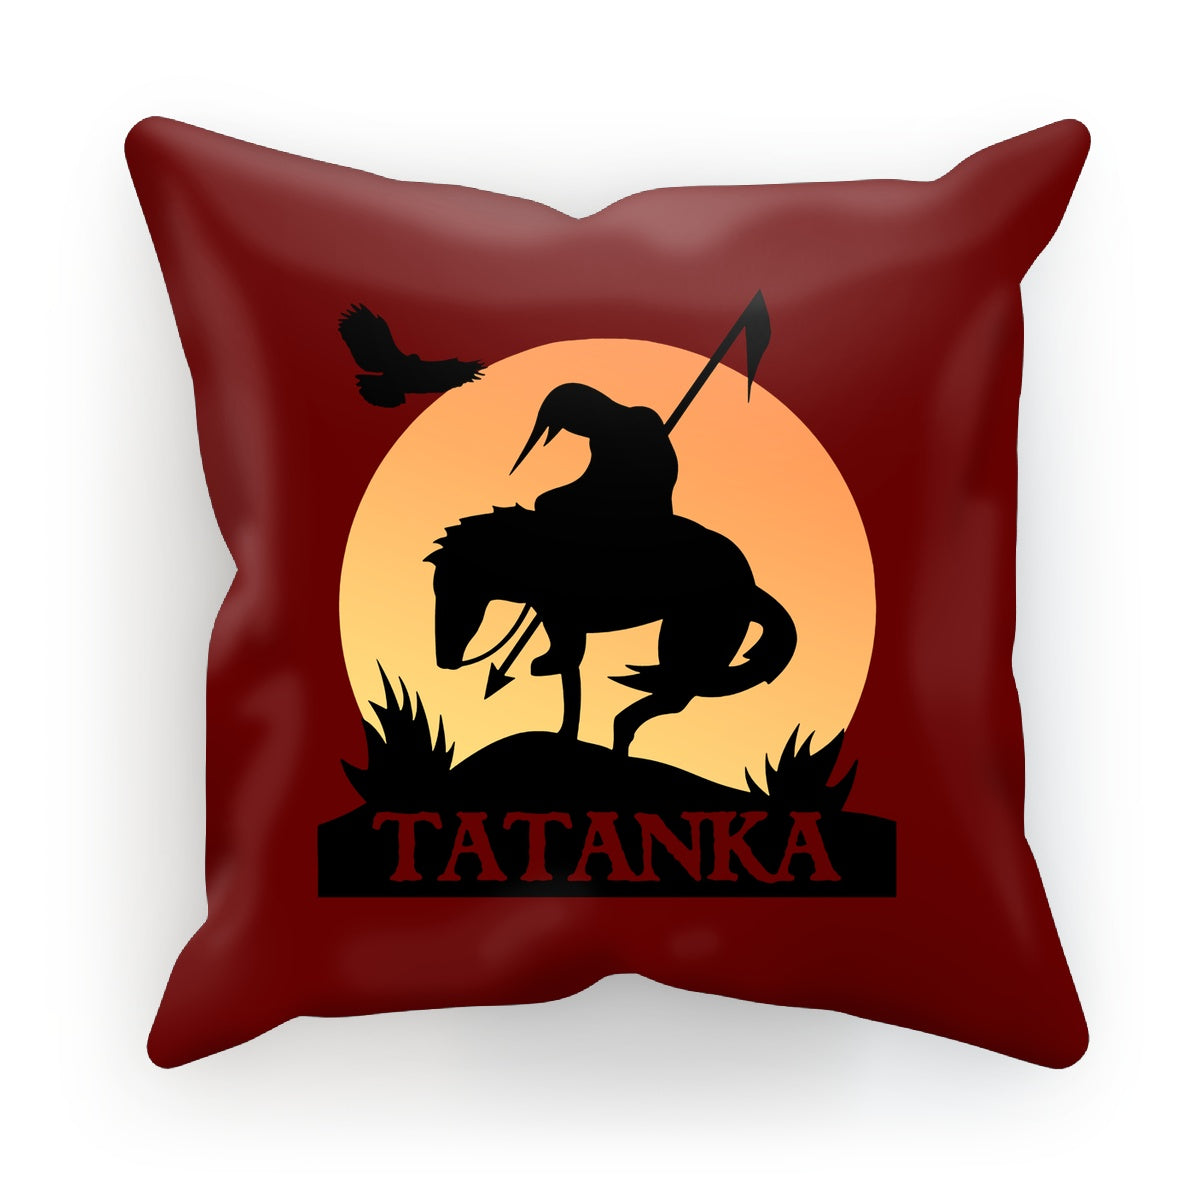 Tatanka End Of The Trail Cushion